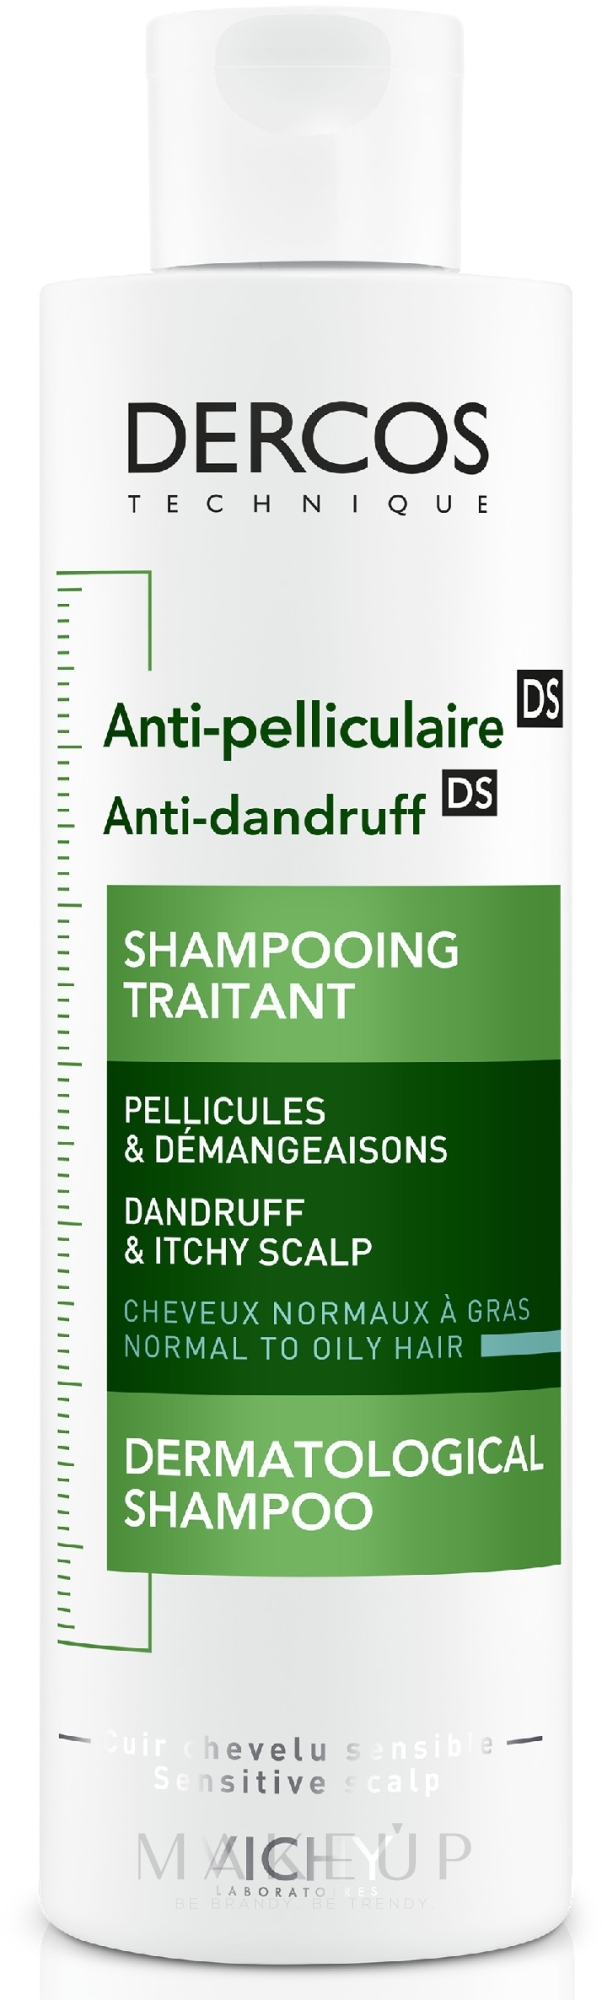 vichy dercos anti pelliculaire szampon 200ml